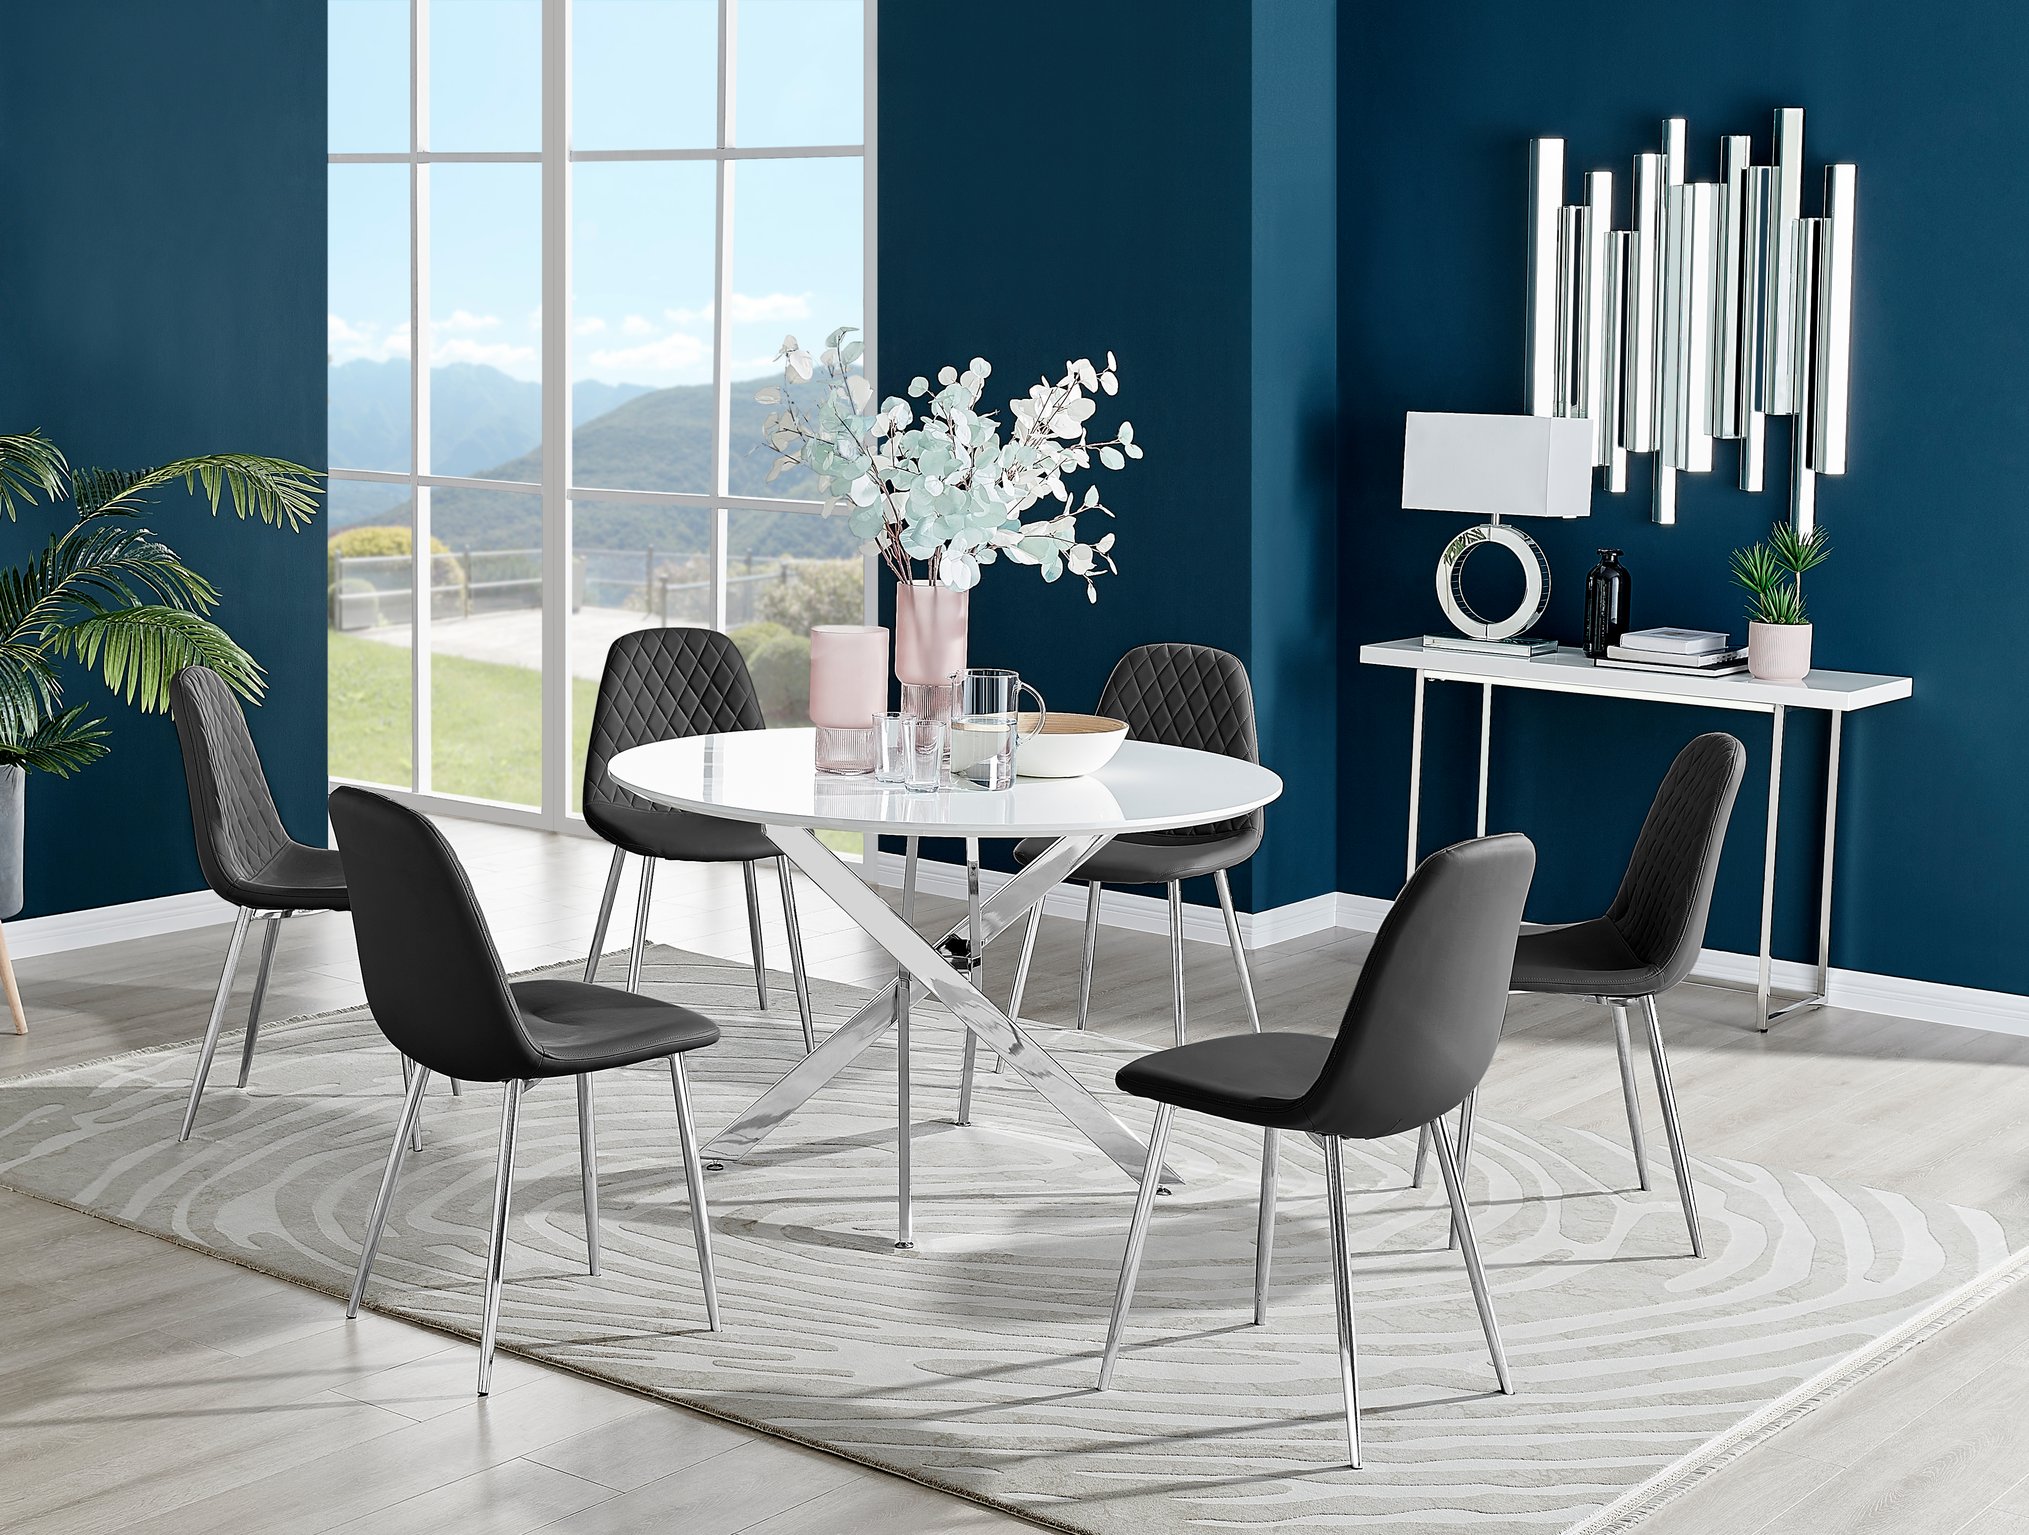 Novara White High Gloss Round Dining Table 120cm & 6 Corona Chairs Furniture Set